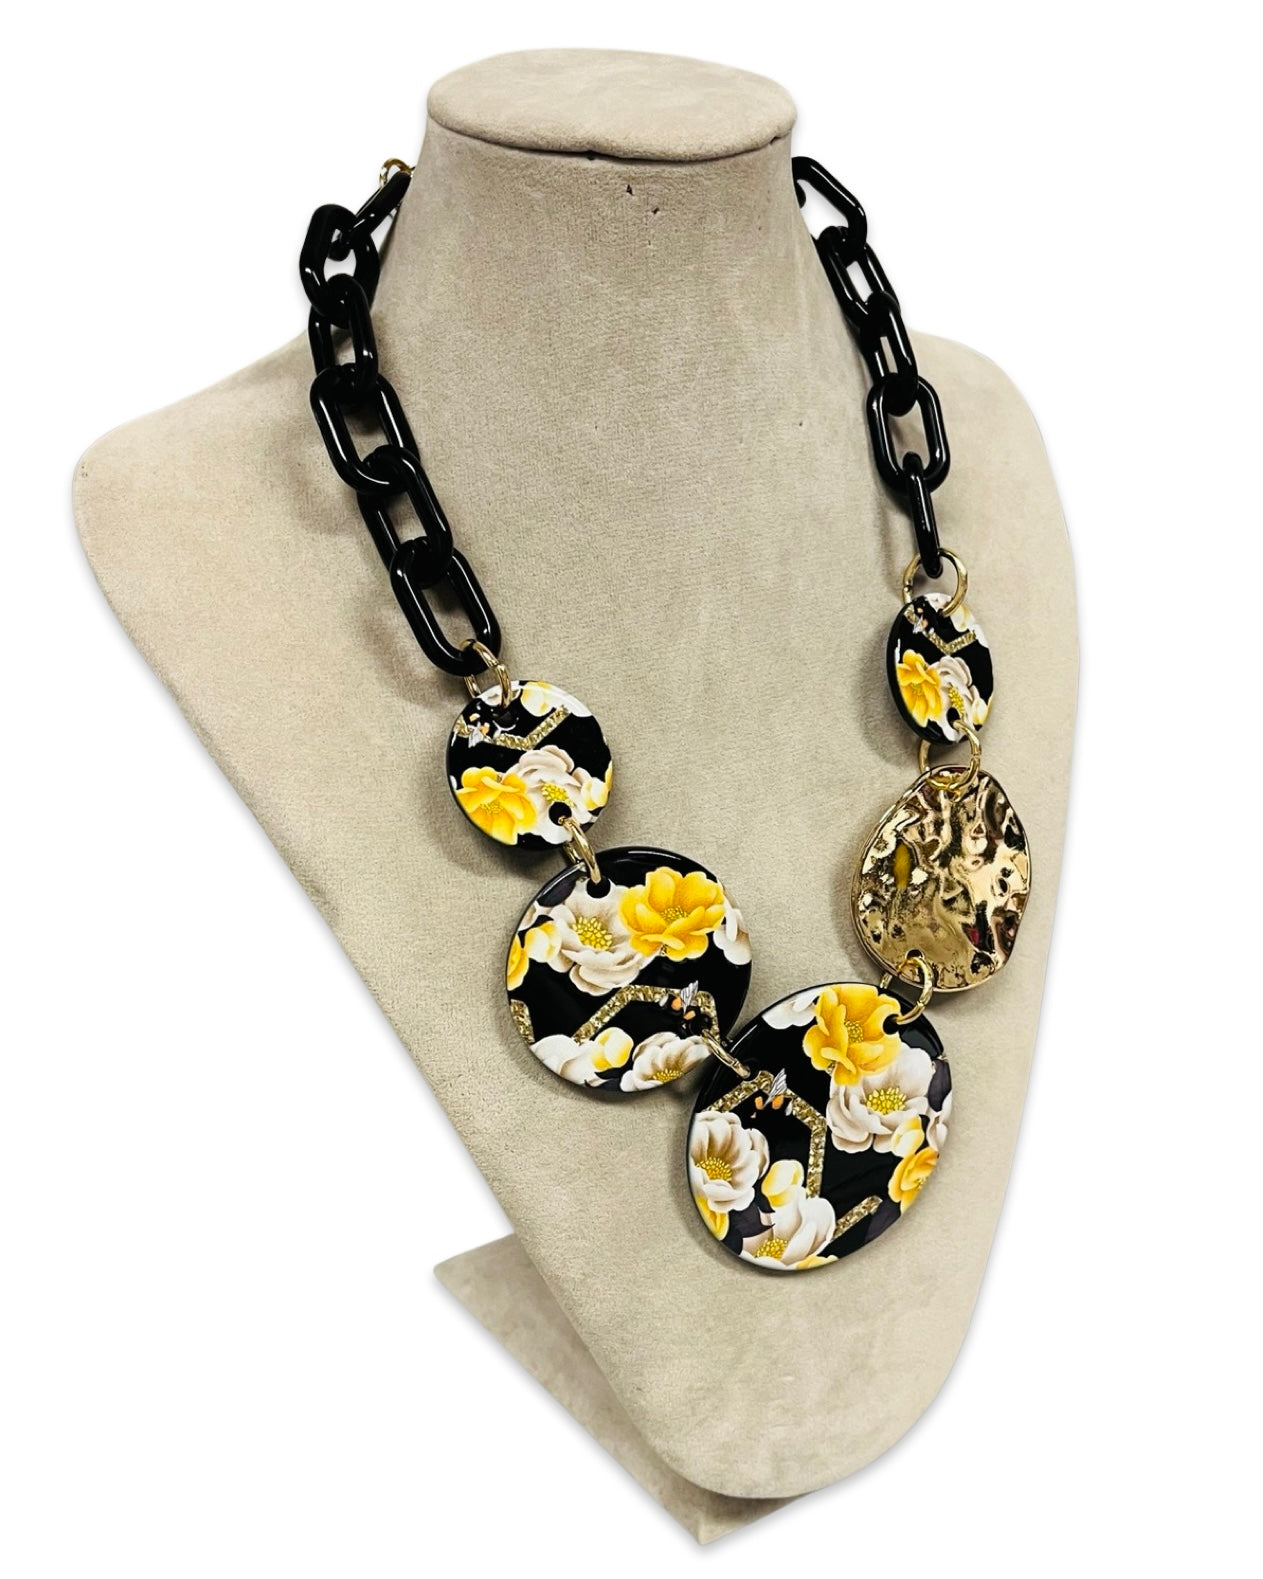 Black & Gold Floral Statement Necklace